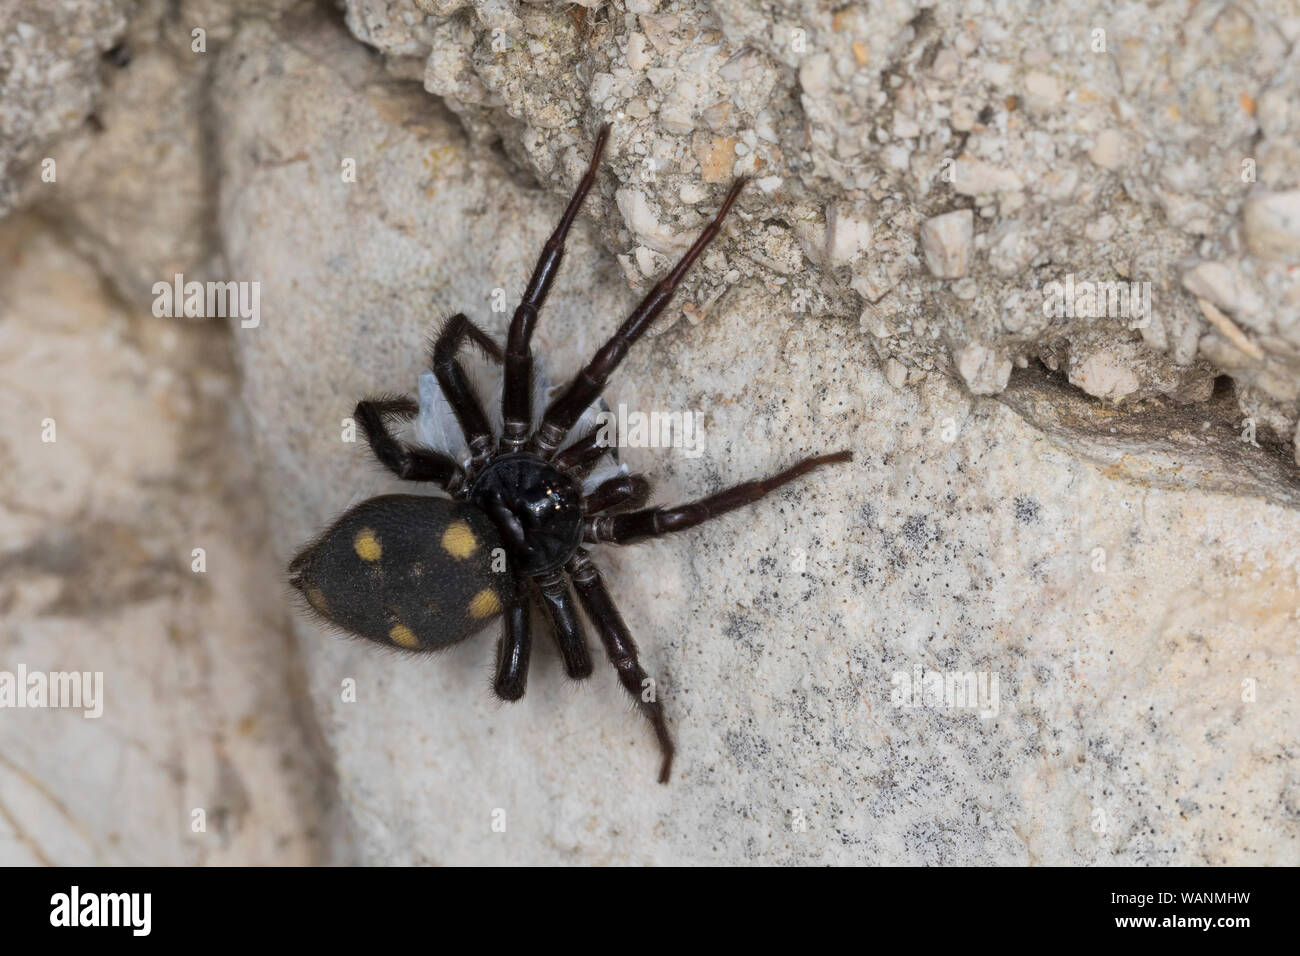 Zeltdachspinne, Zeltdach-Spinne, mit Beute, Uroctea durandi, Oecobiidae, Scheibennetzspinnen, Kroatien, Croatia Stock Photo